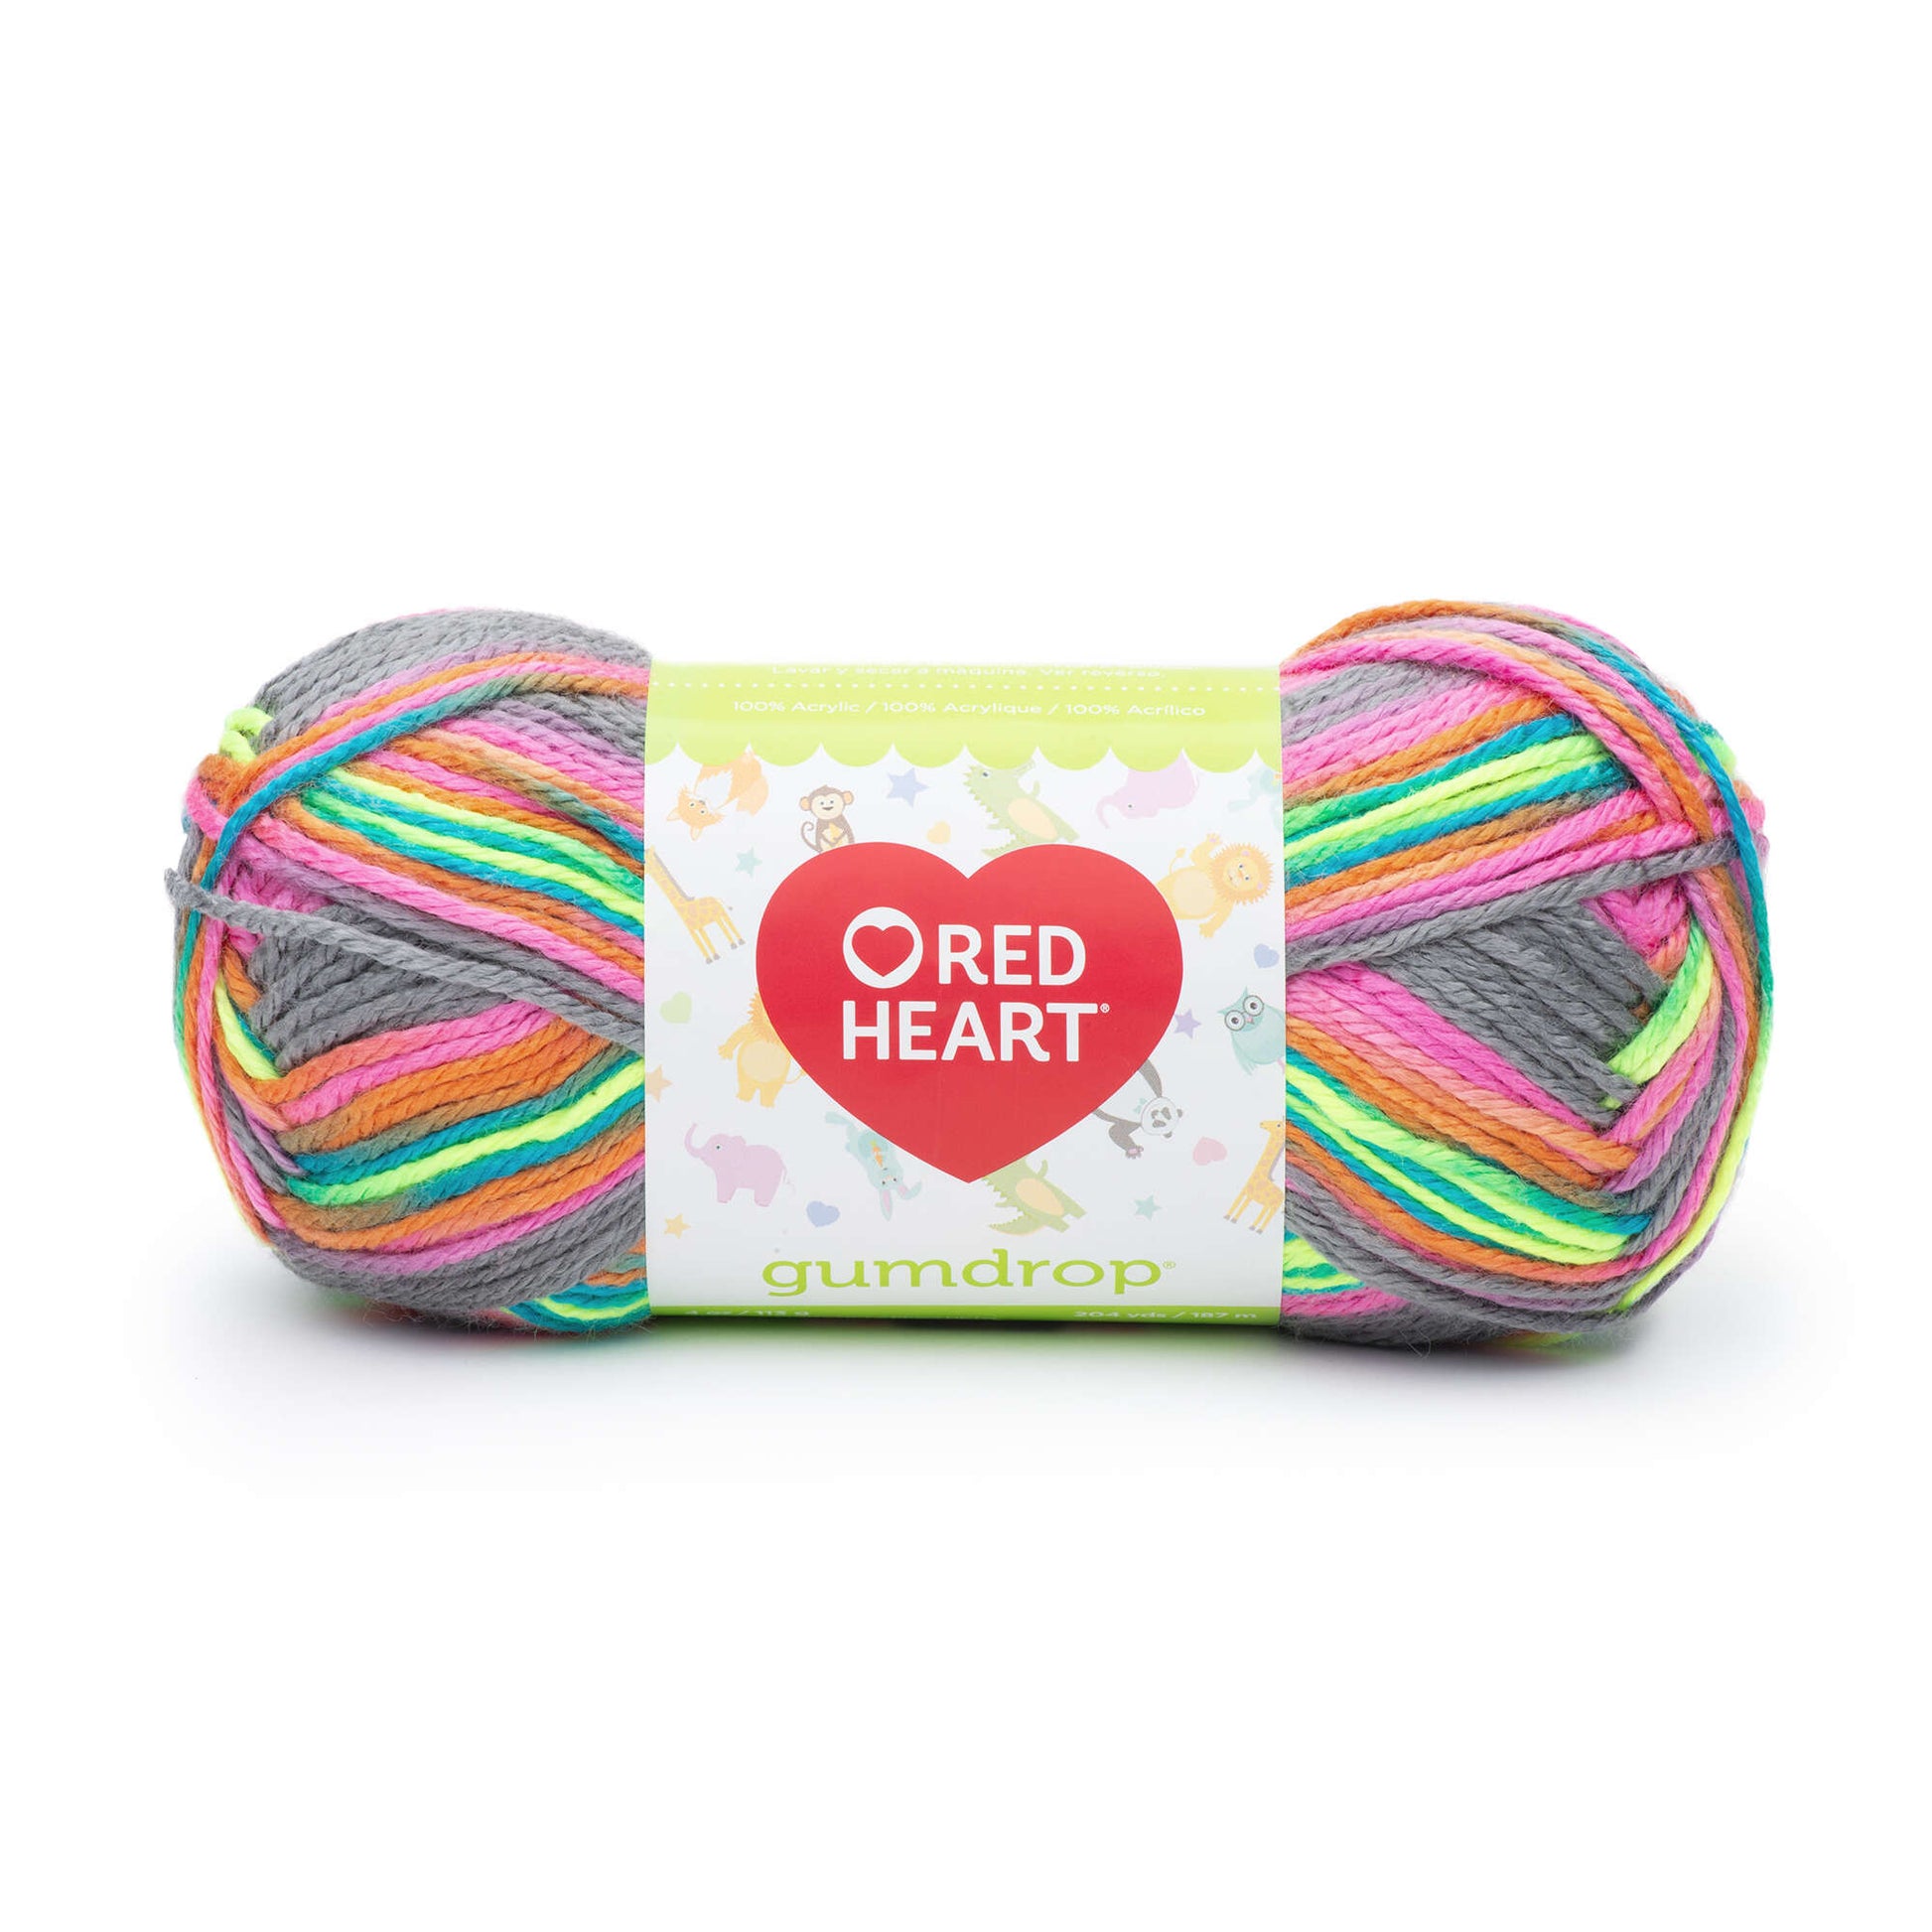 Red Heart Gumdrop Yarn - Discontinued shades Rock Candy